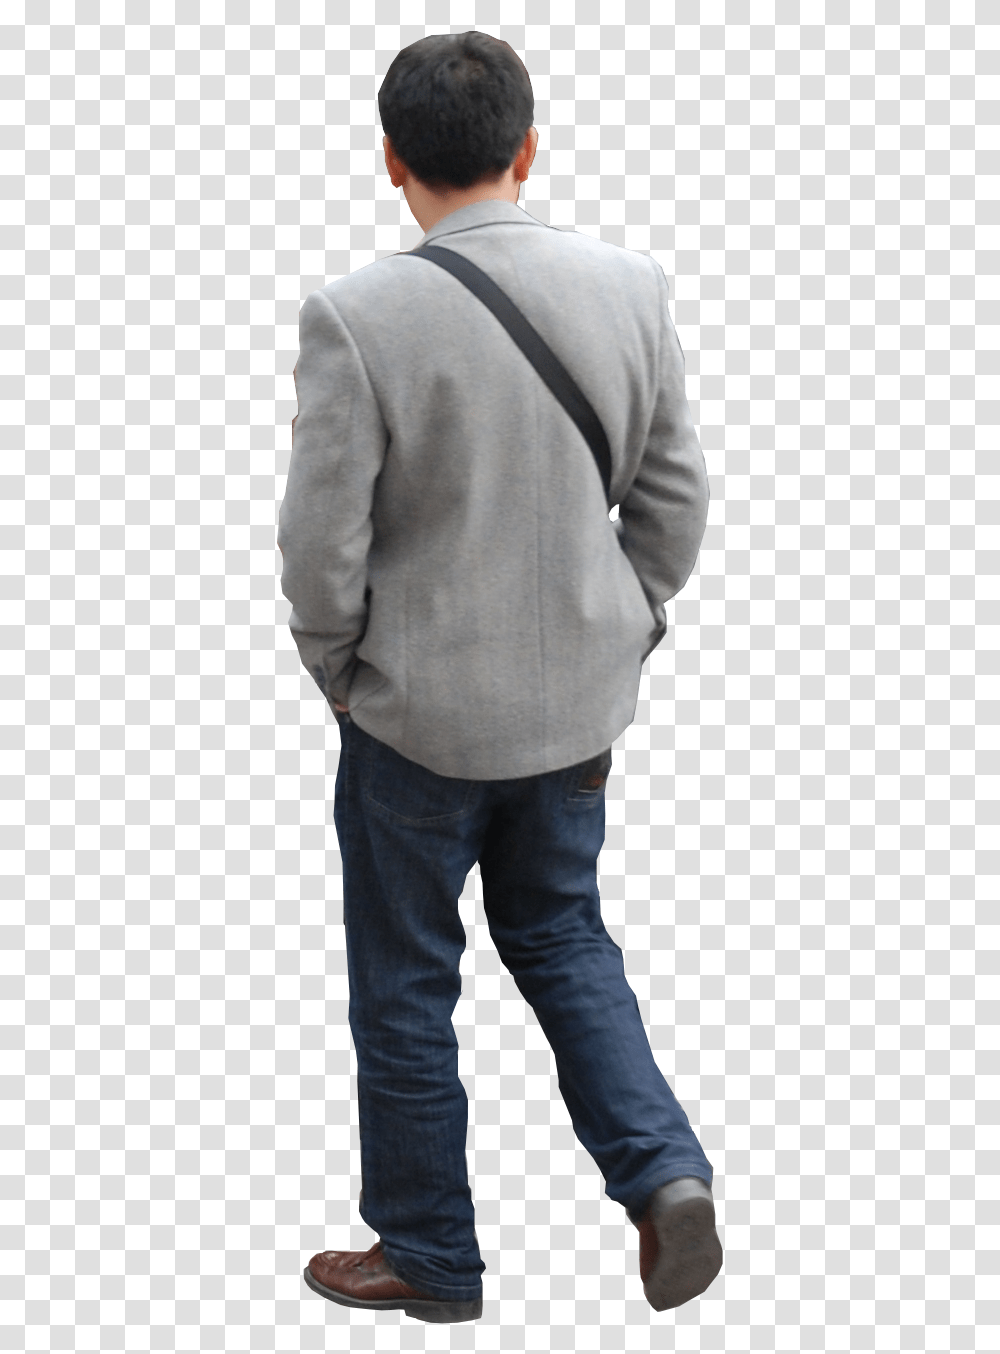 Free Cutout Photo Of A Man Walking Away Render People Background Person Walking, Clothing, Sweater, Sweatshirt, Sleeve Transparent Png